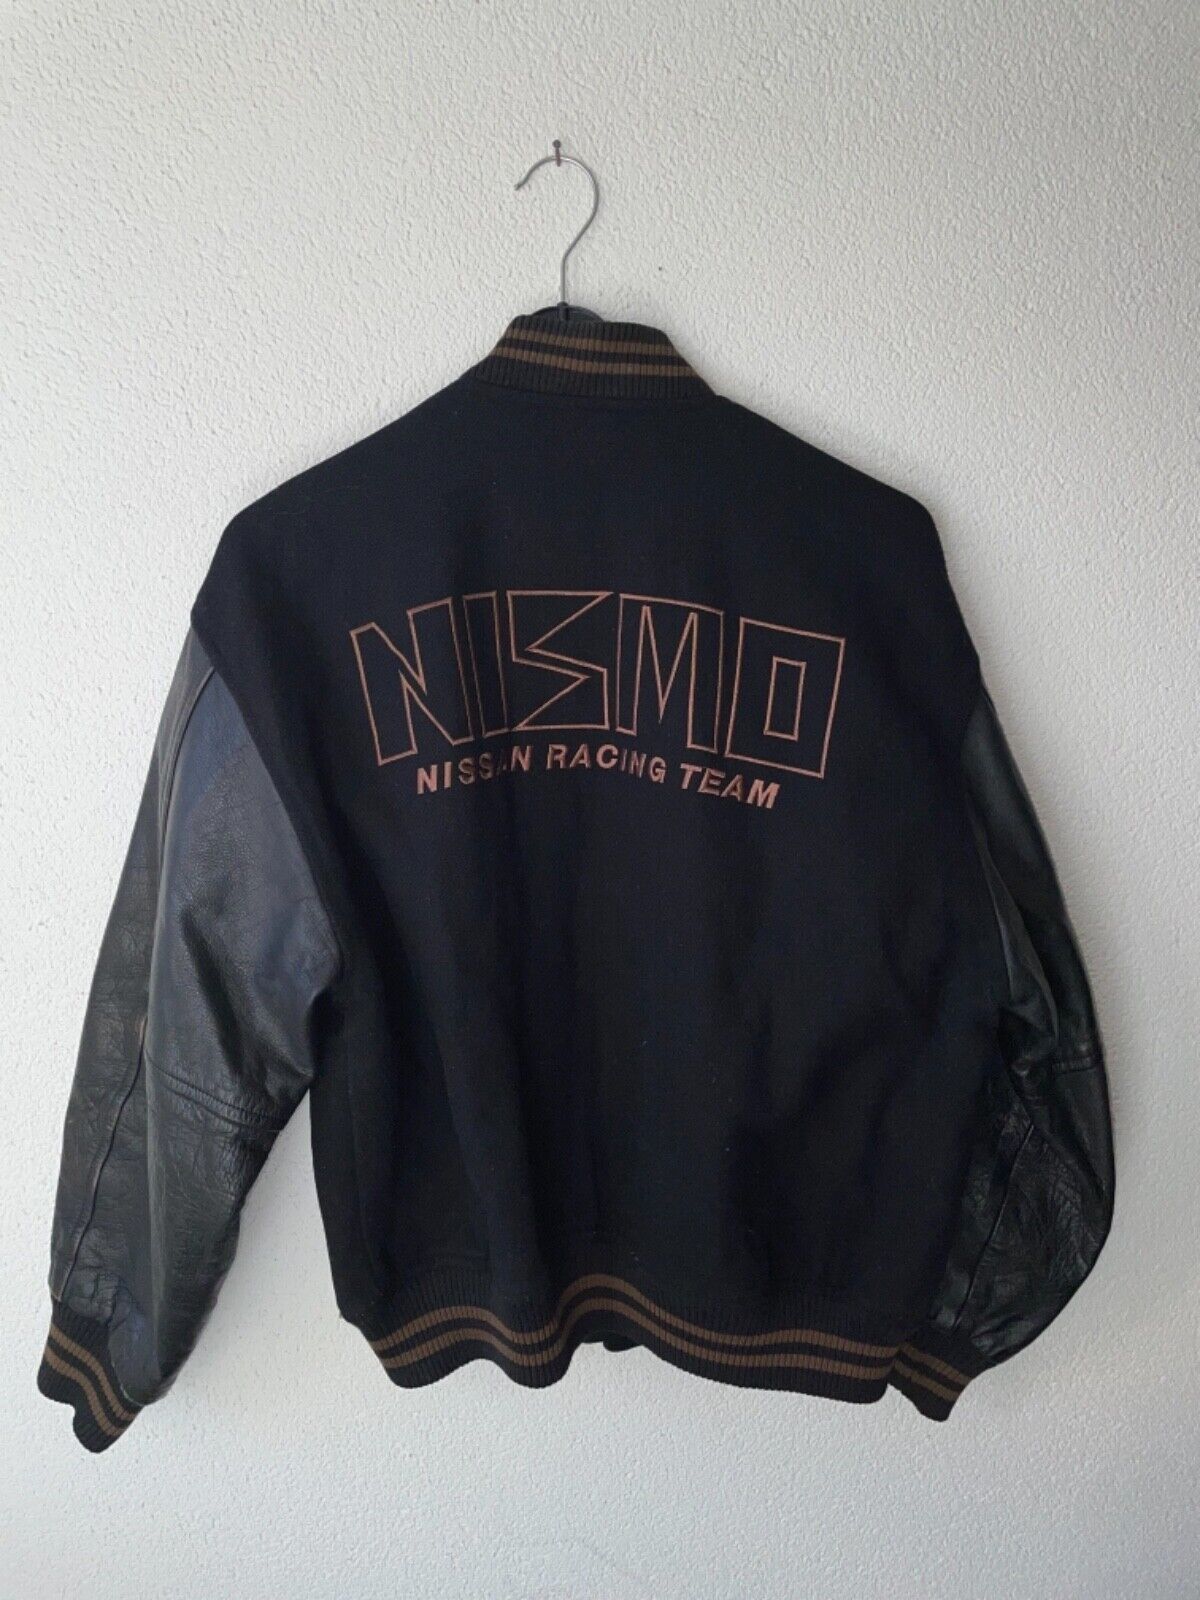 Nismo Old Logo Leather Sleeve Baseball Bomber Jacket Rare 90s R32 